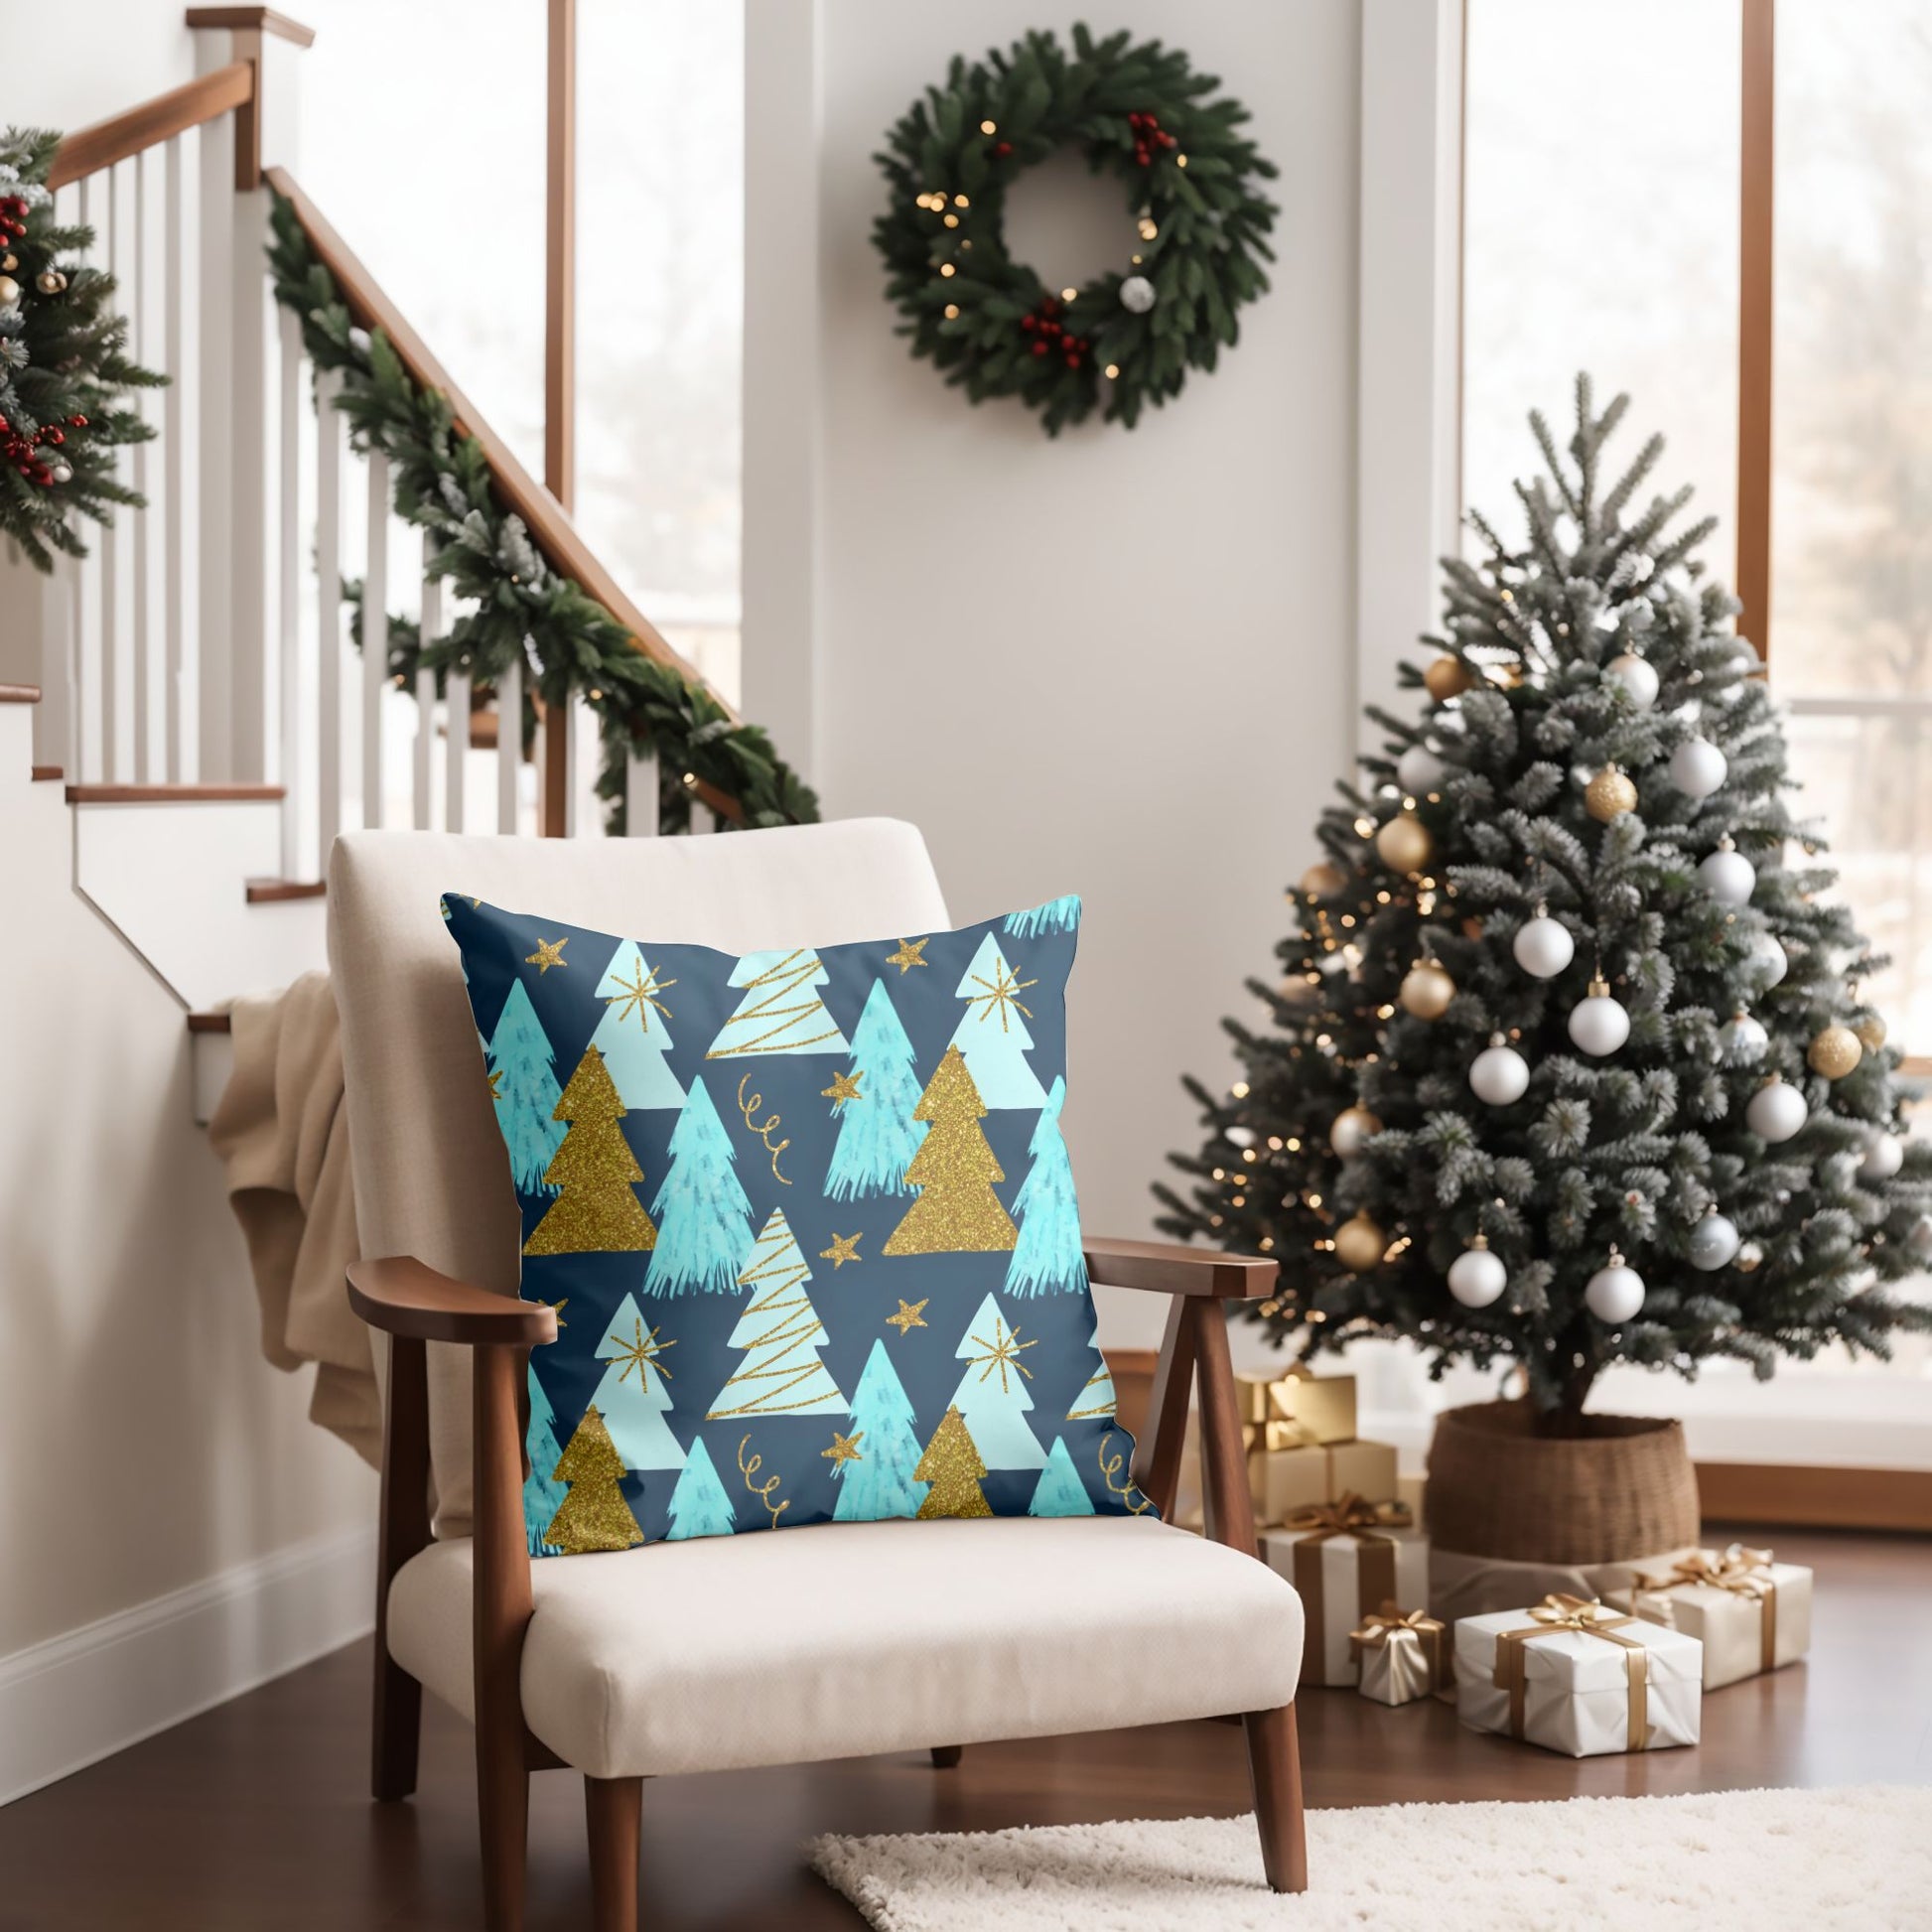 Detailed Close-up of Festive Christmas Tree Cushion